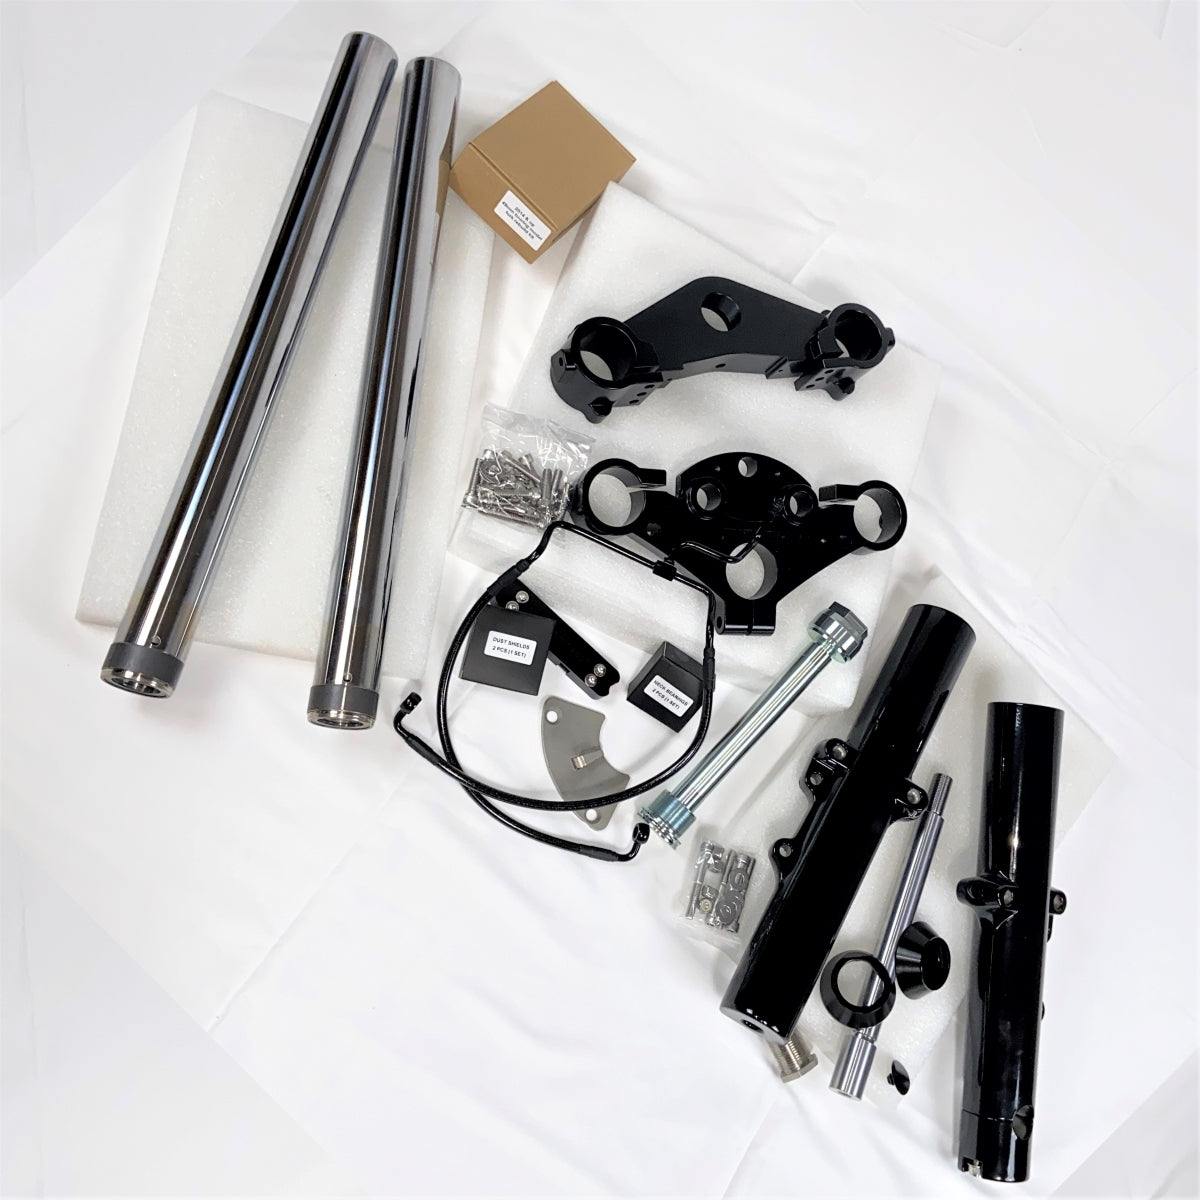 GeezerEngineering Triple-Tree, Fork-Slider, 49 mm Tubes, Rebuild Kit for Harley 2013 & earlier Touring